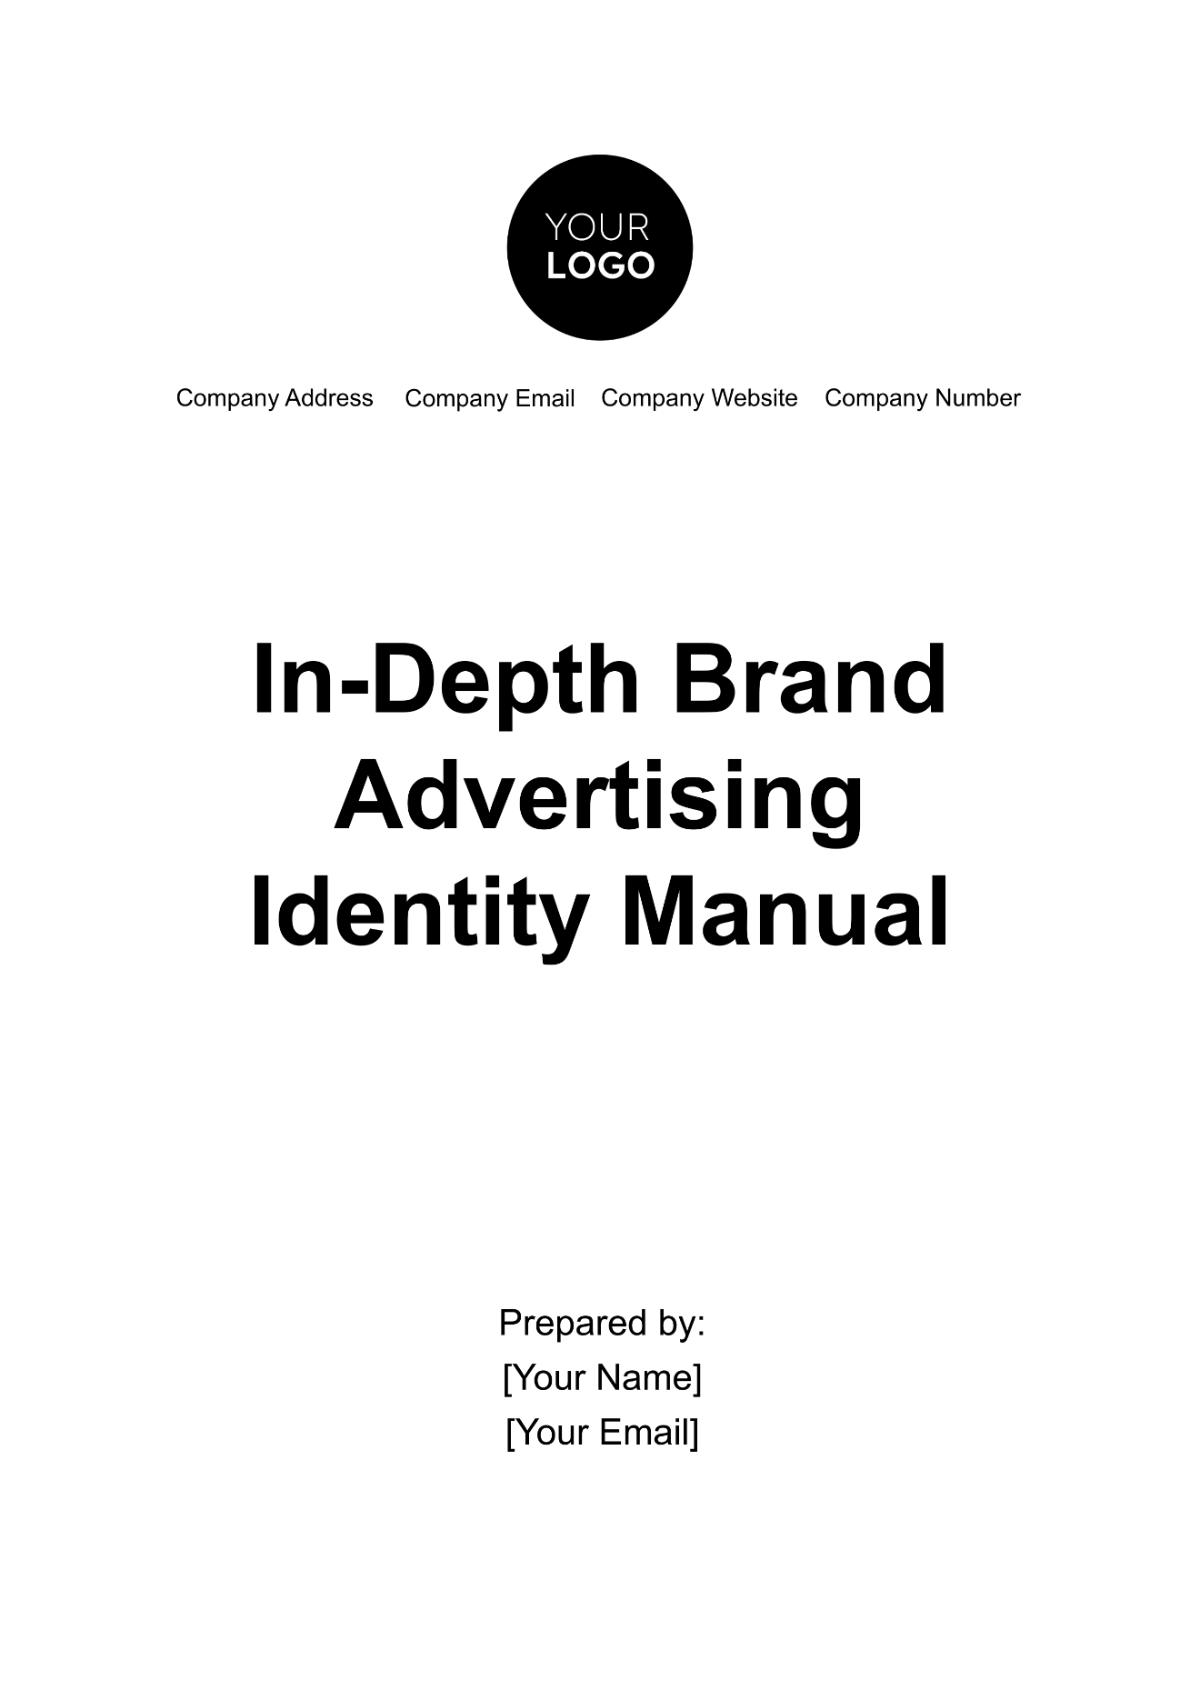 In-Depth Brand Advertising Identity Manual Template